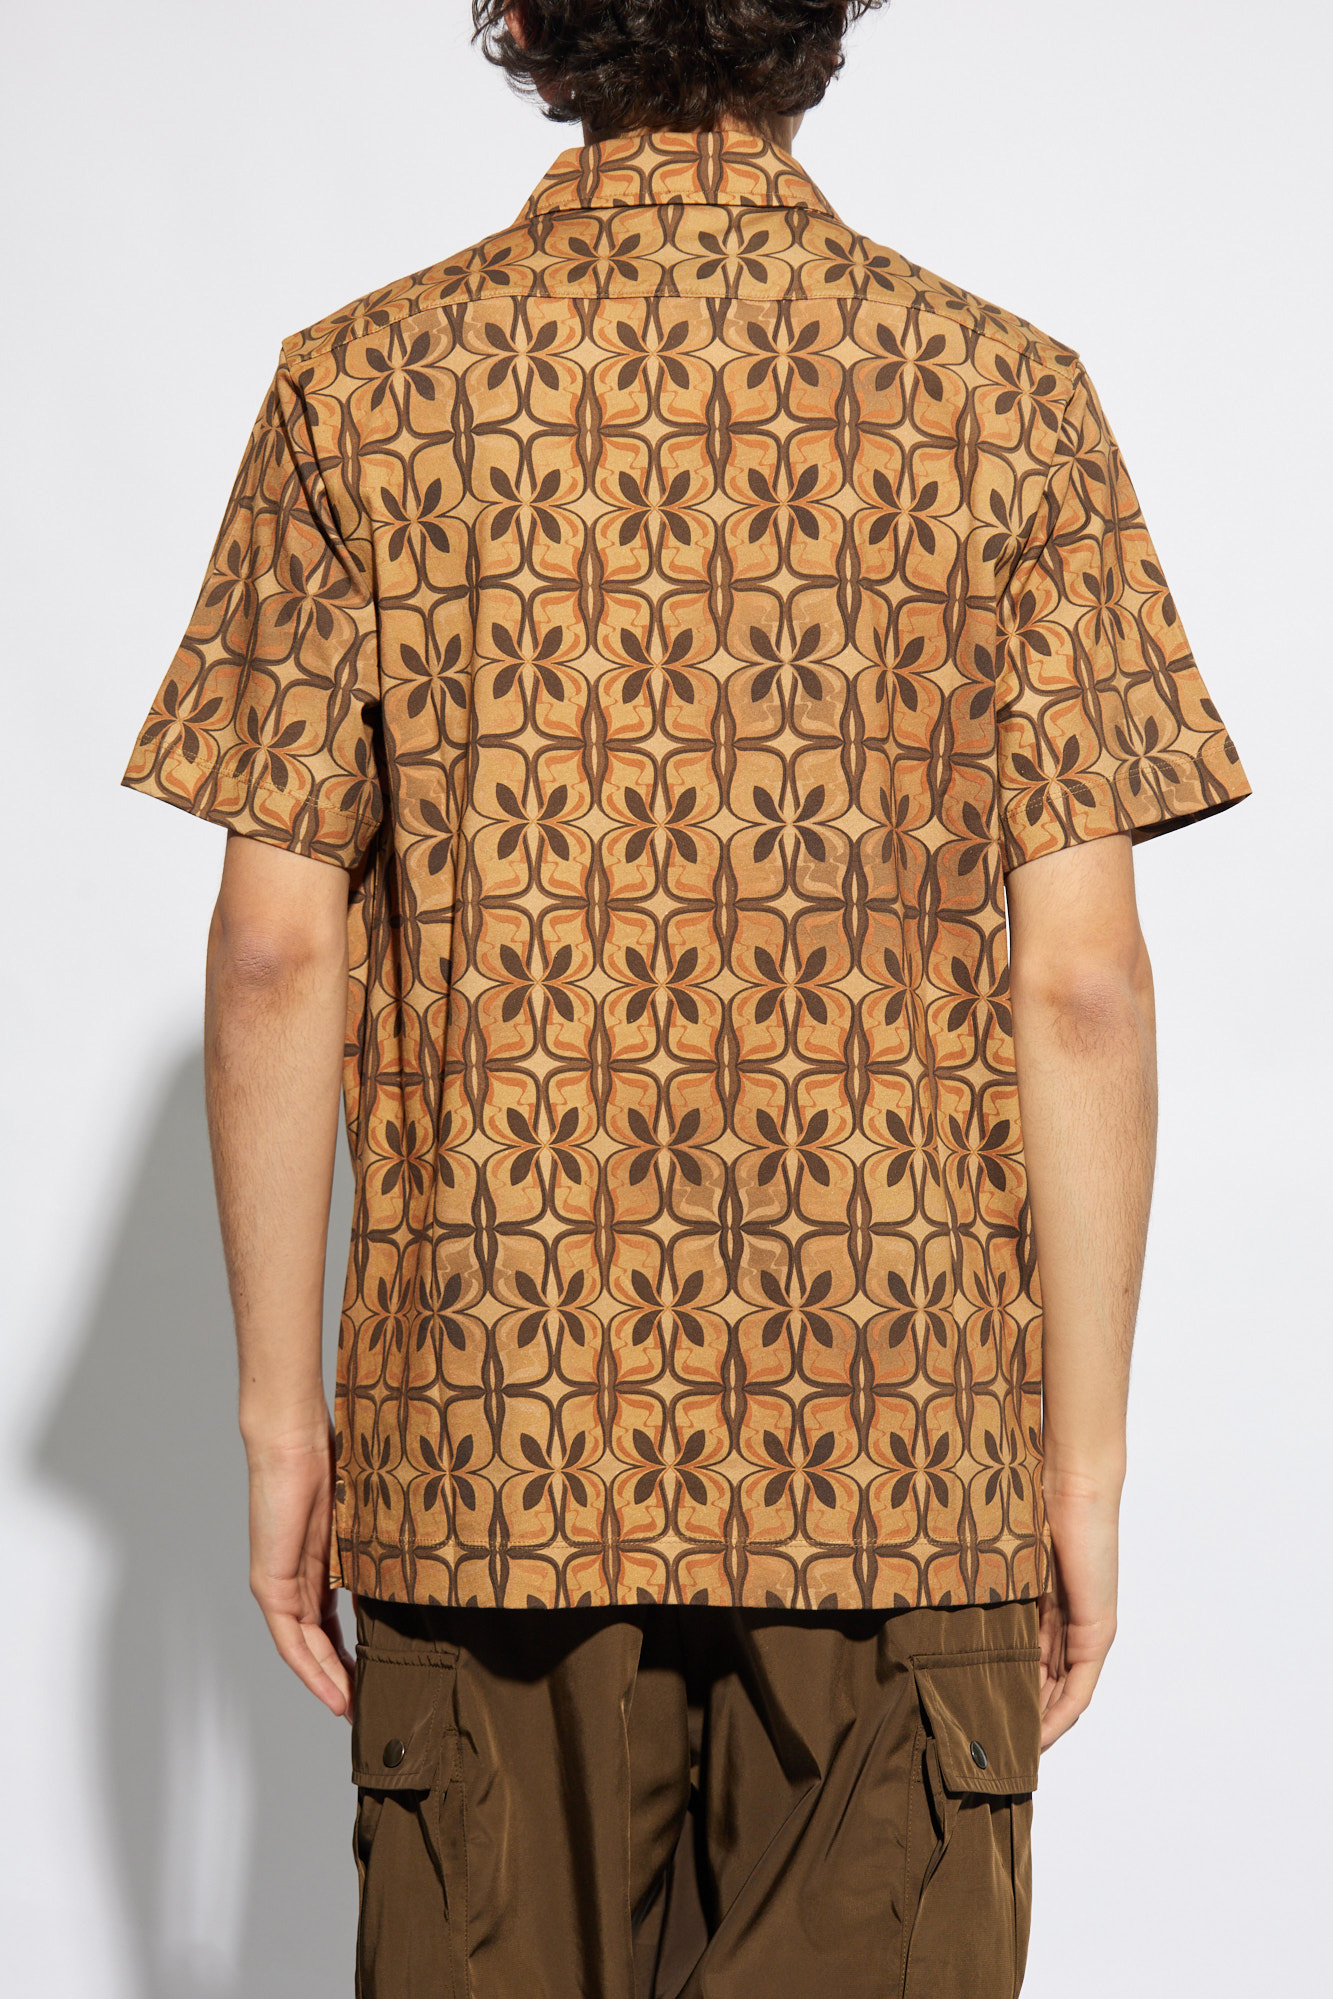 Dries Van Noten polo dress shirt with floral motif